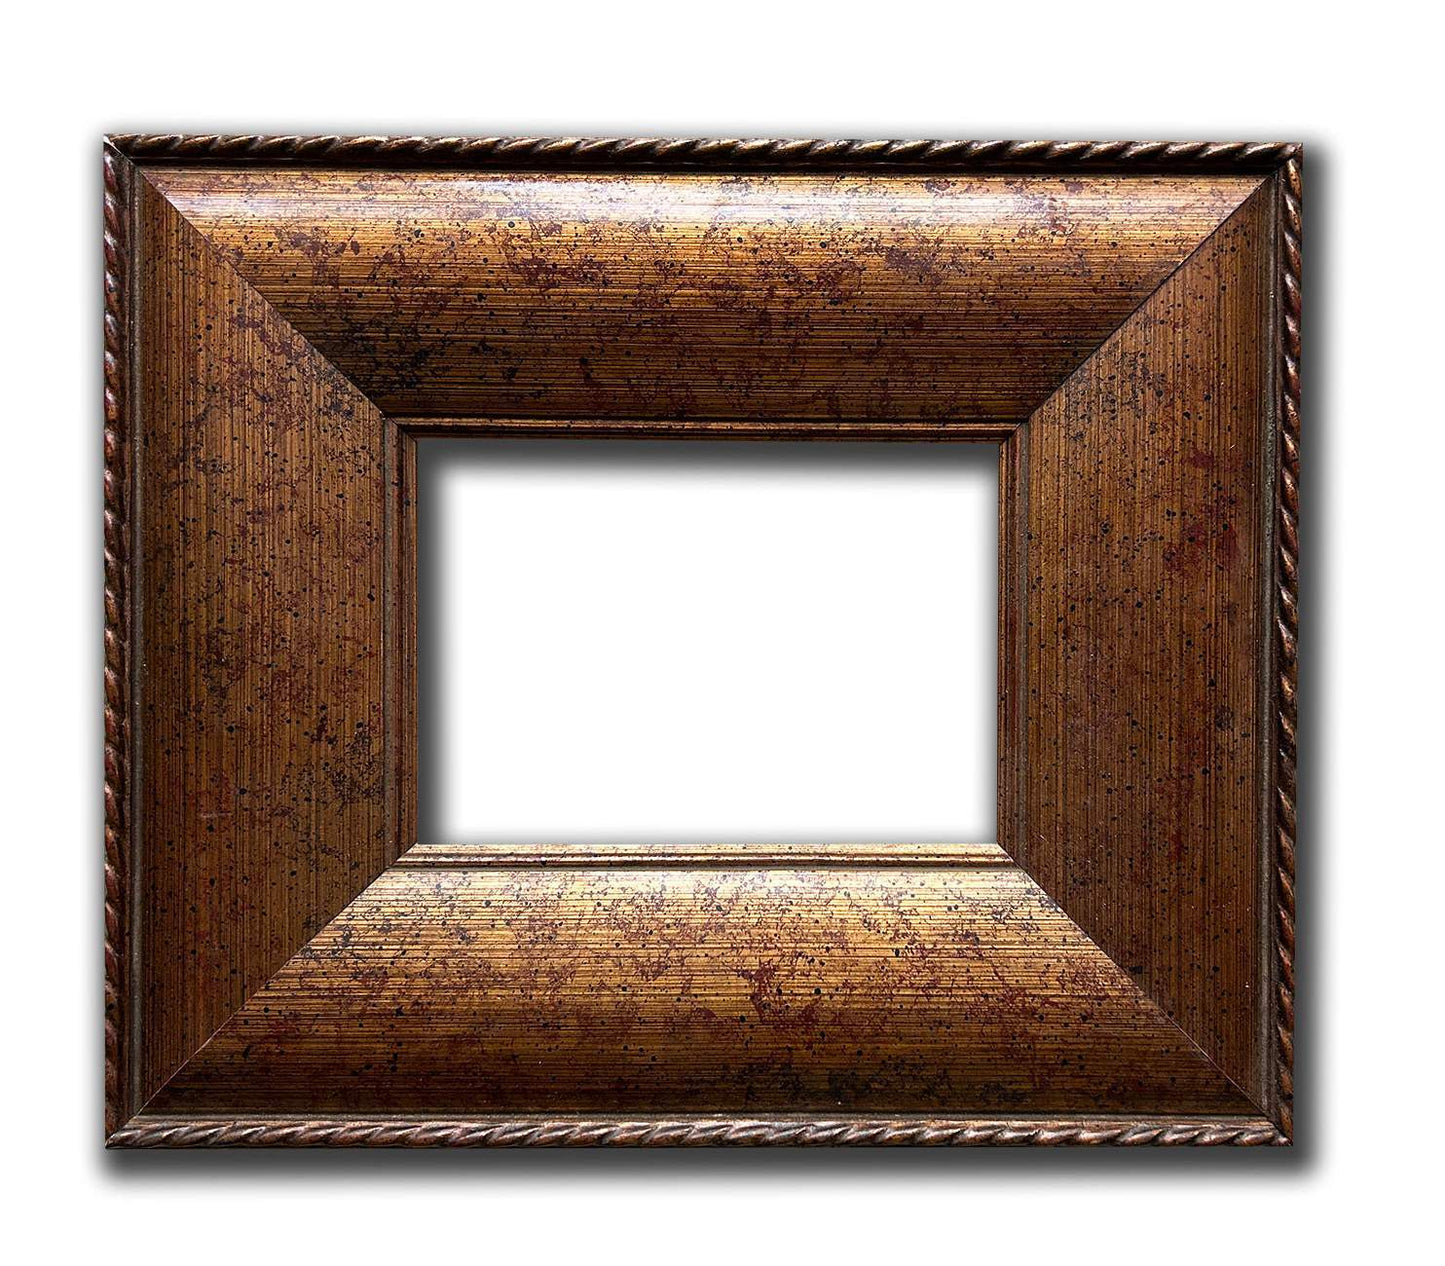 13x18 cm or 5x7 ins photo frame